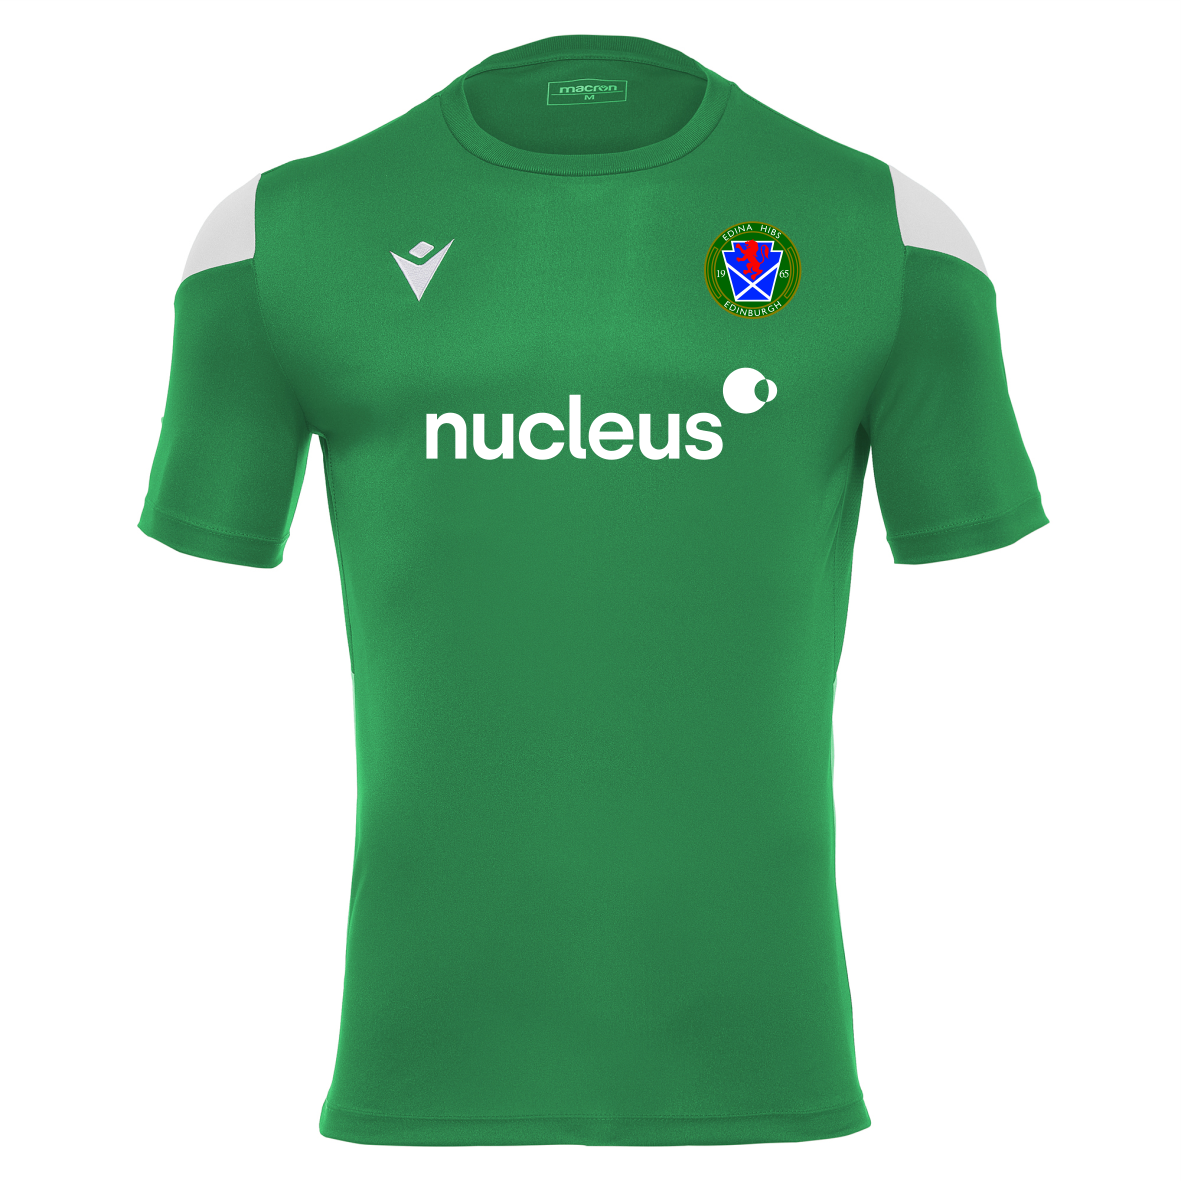 Nucleus Finance logo